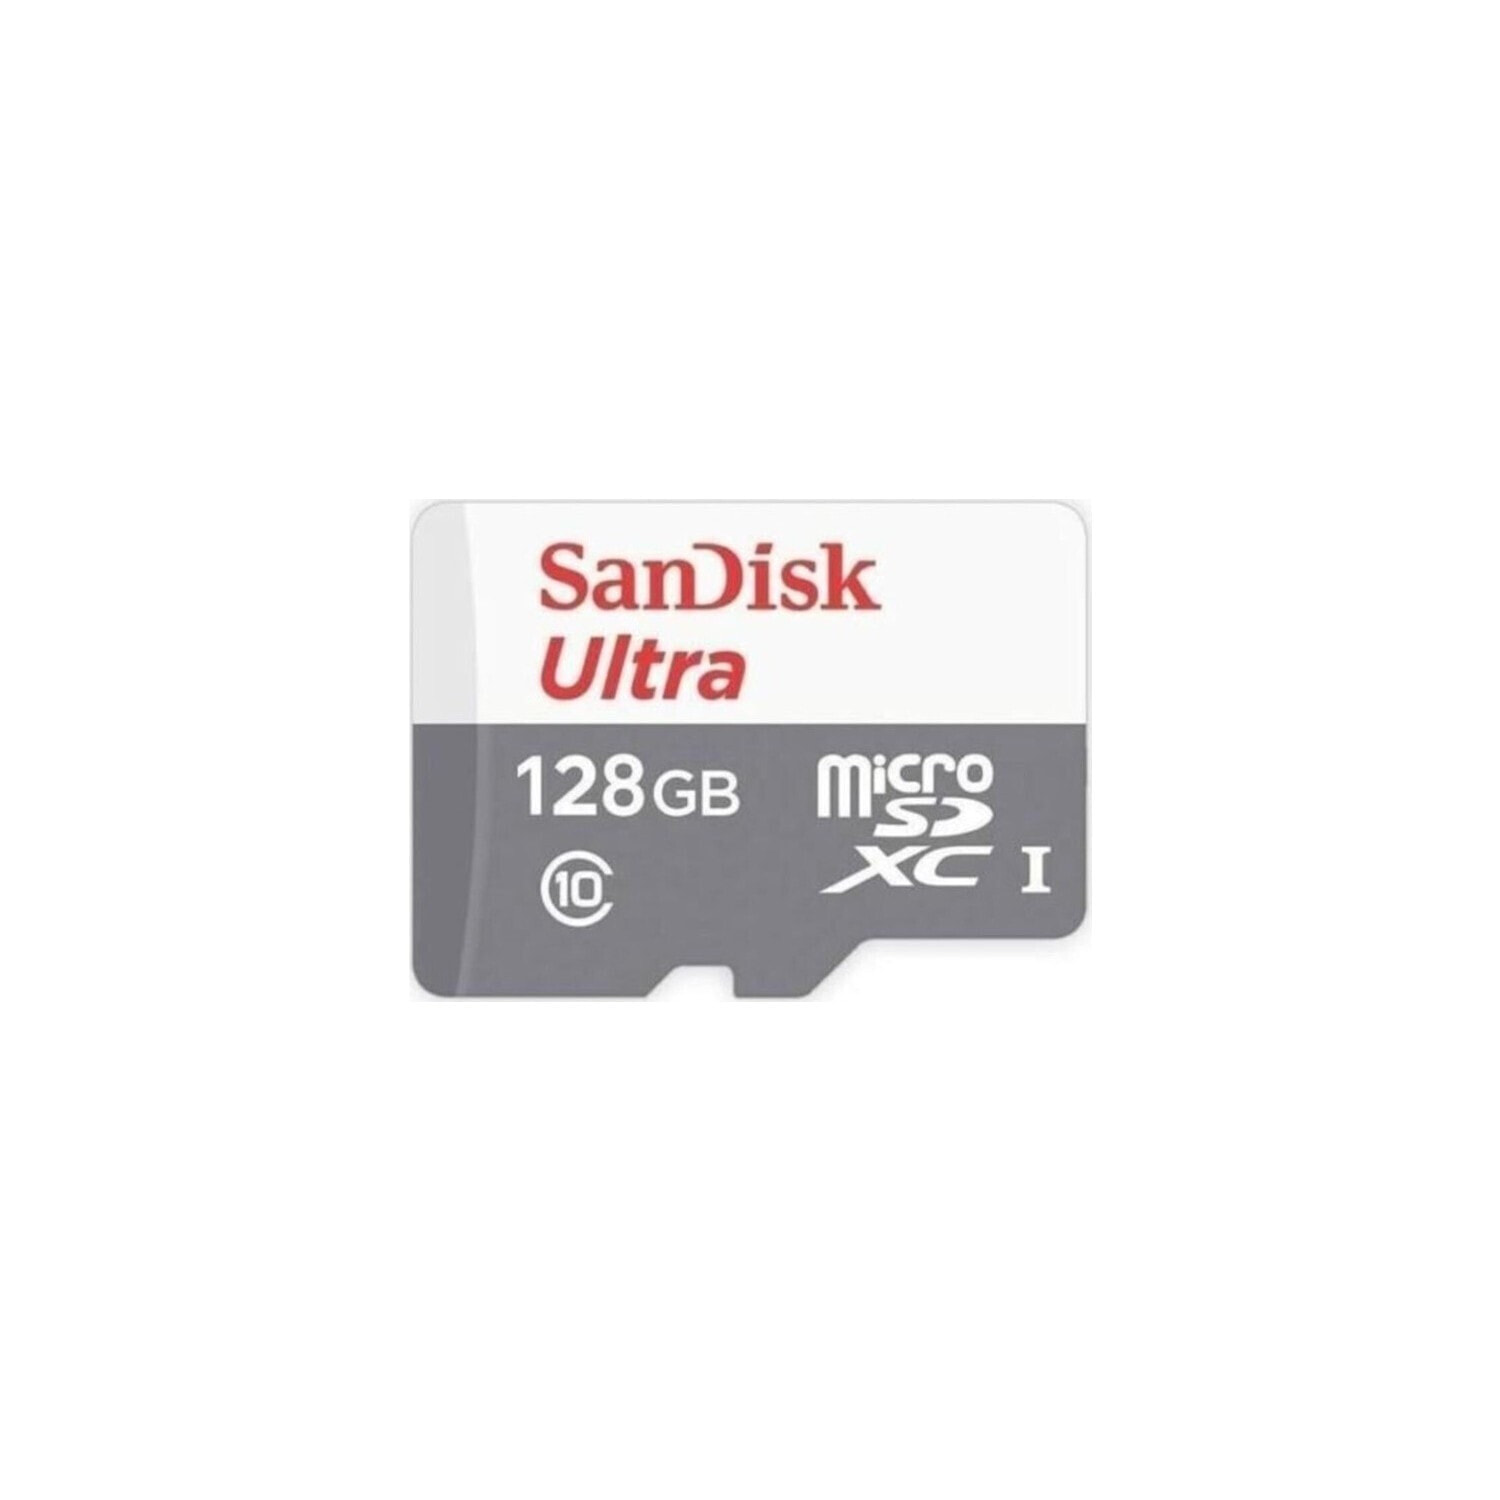 Sandisk Ultra 128GB 100MB/S Microsdxc Uhs-I Hafıza Kartı SDSQUNR-128G-GN6MN